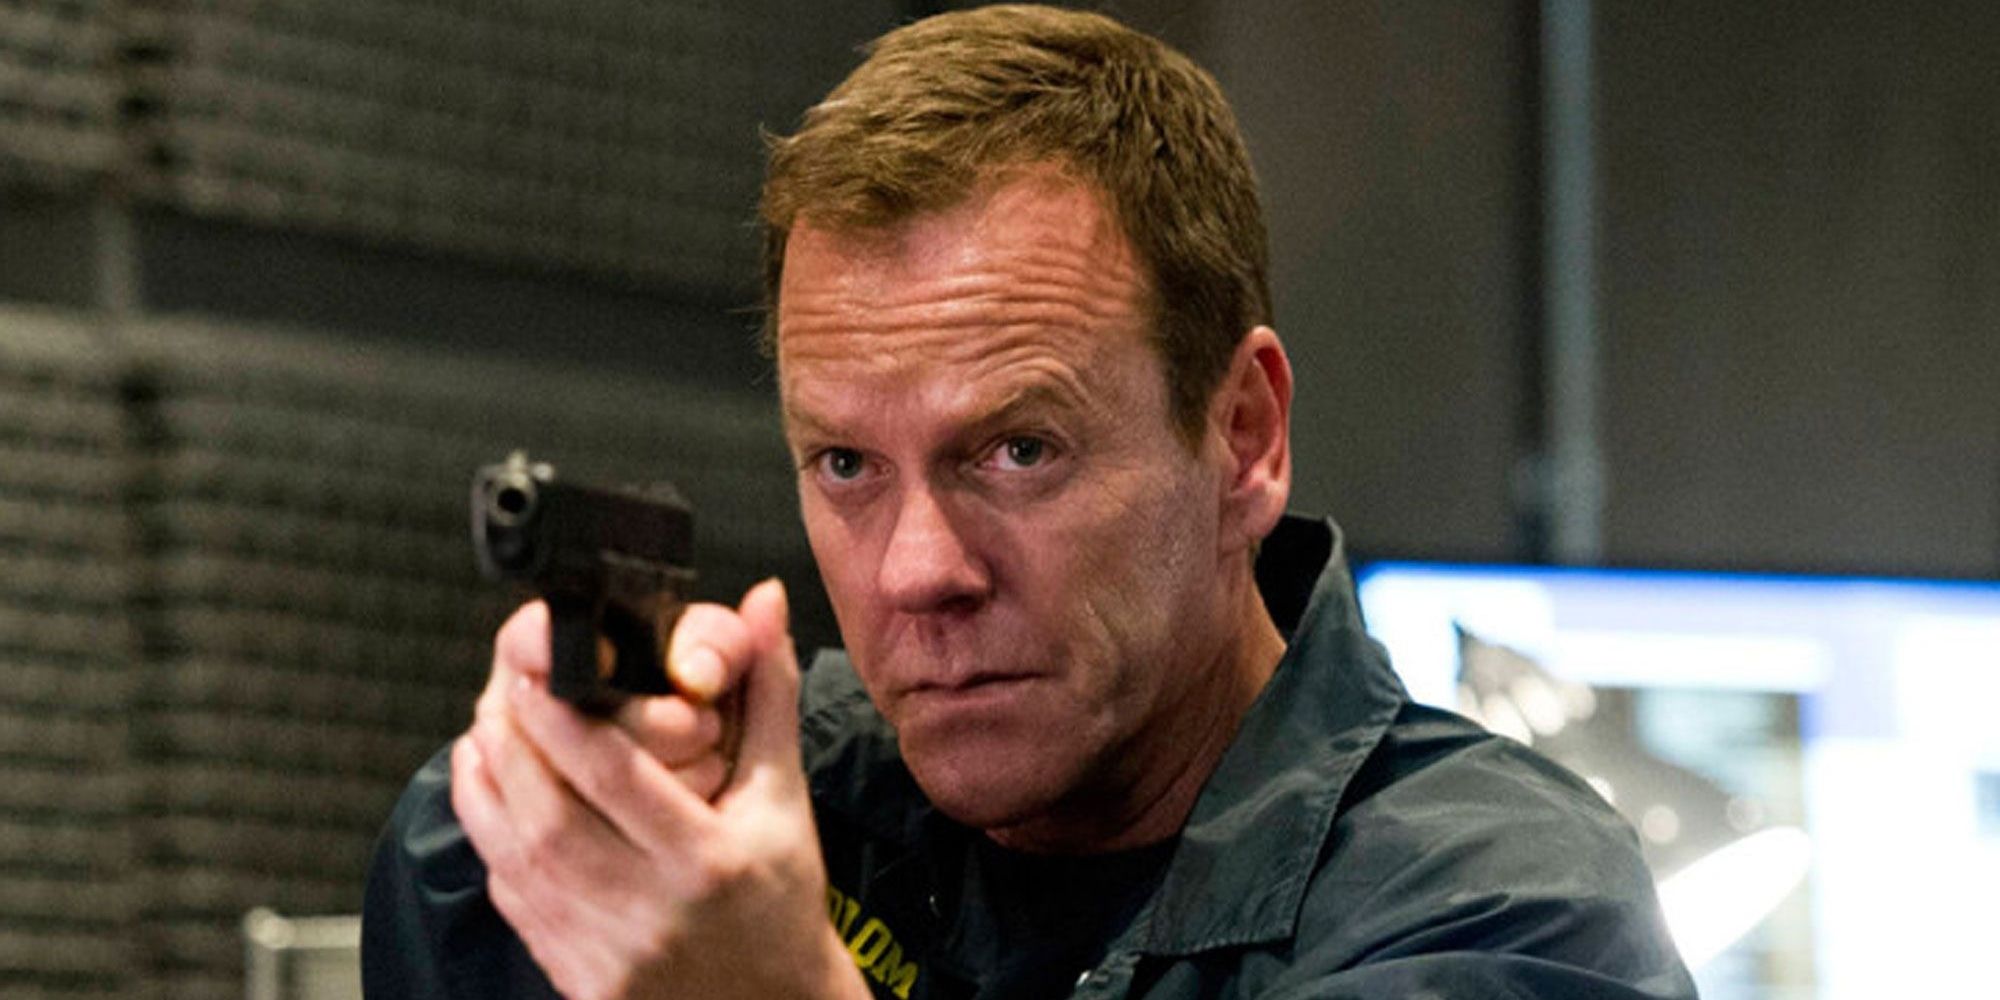 Kiefer Sutherland as Jack Bauer holding a gun in 24 